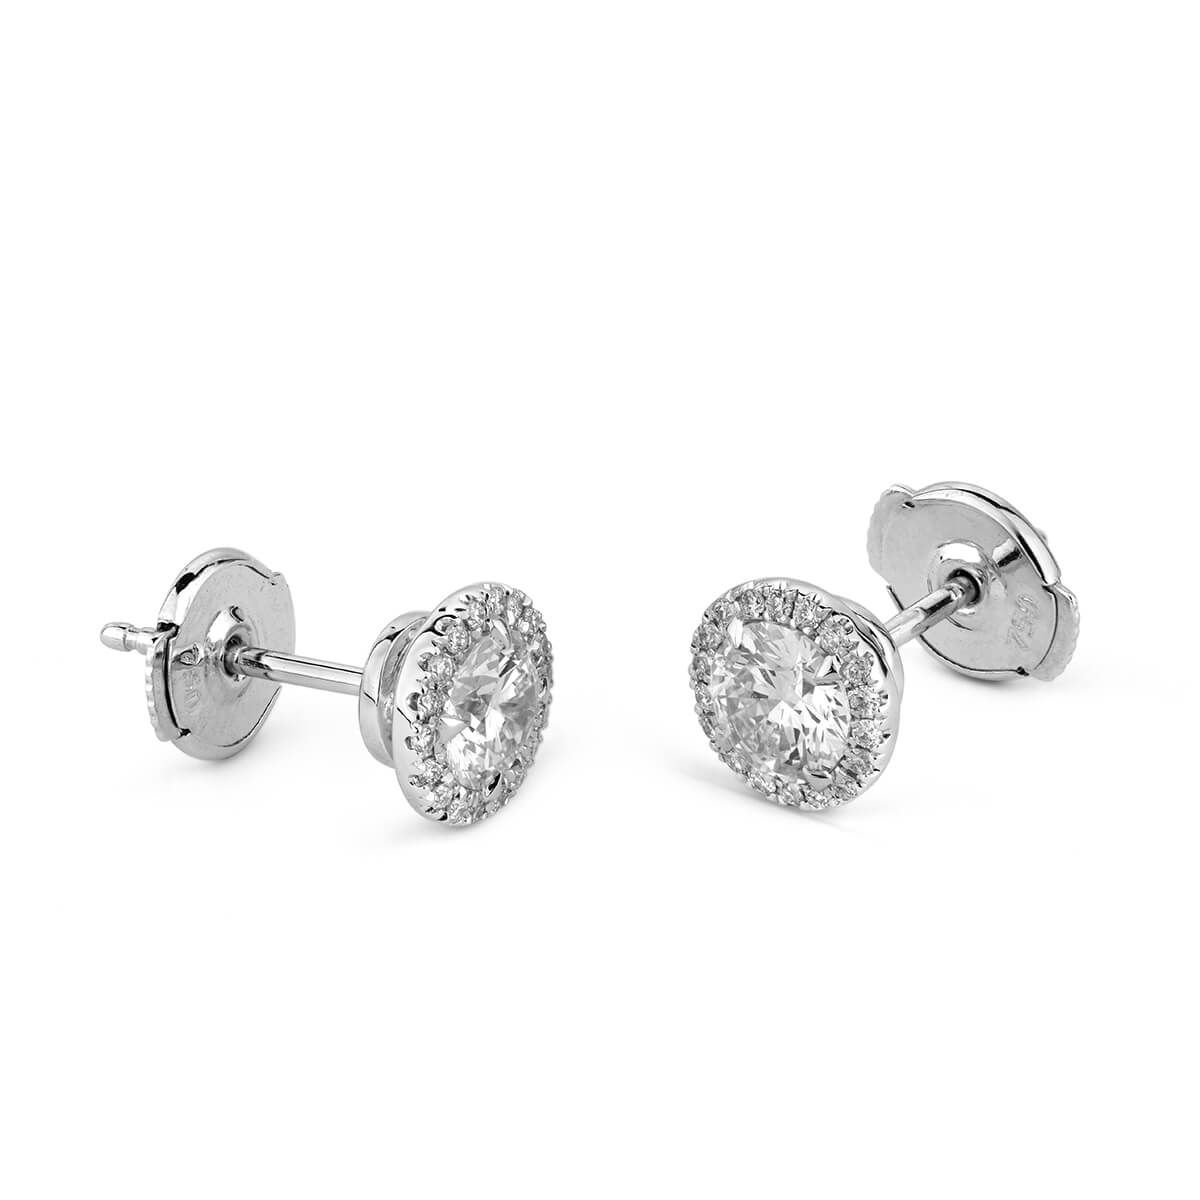  White Diamond Earrings, 0.83 Ct. TW, Round shape